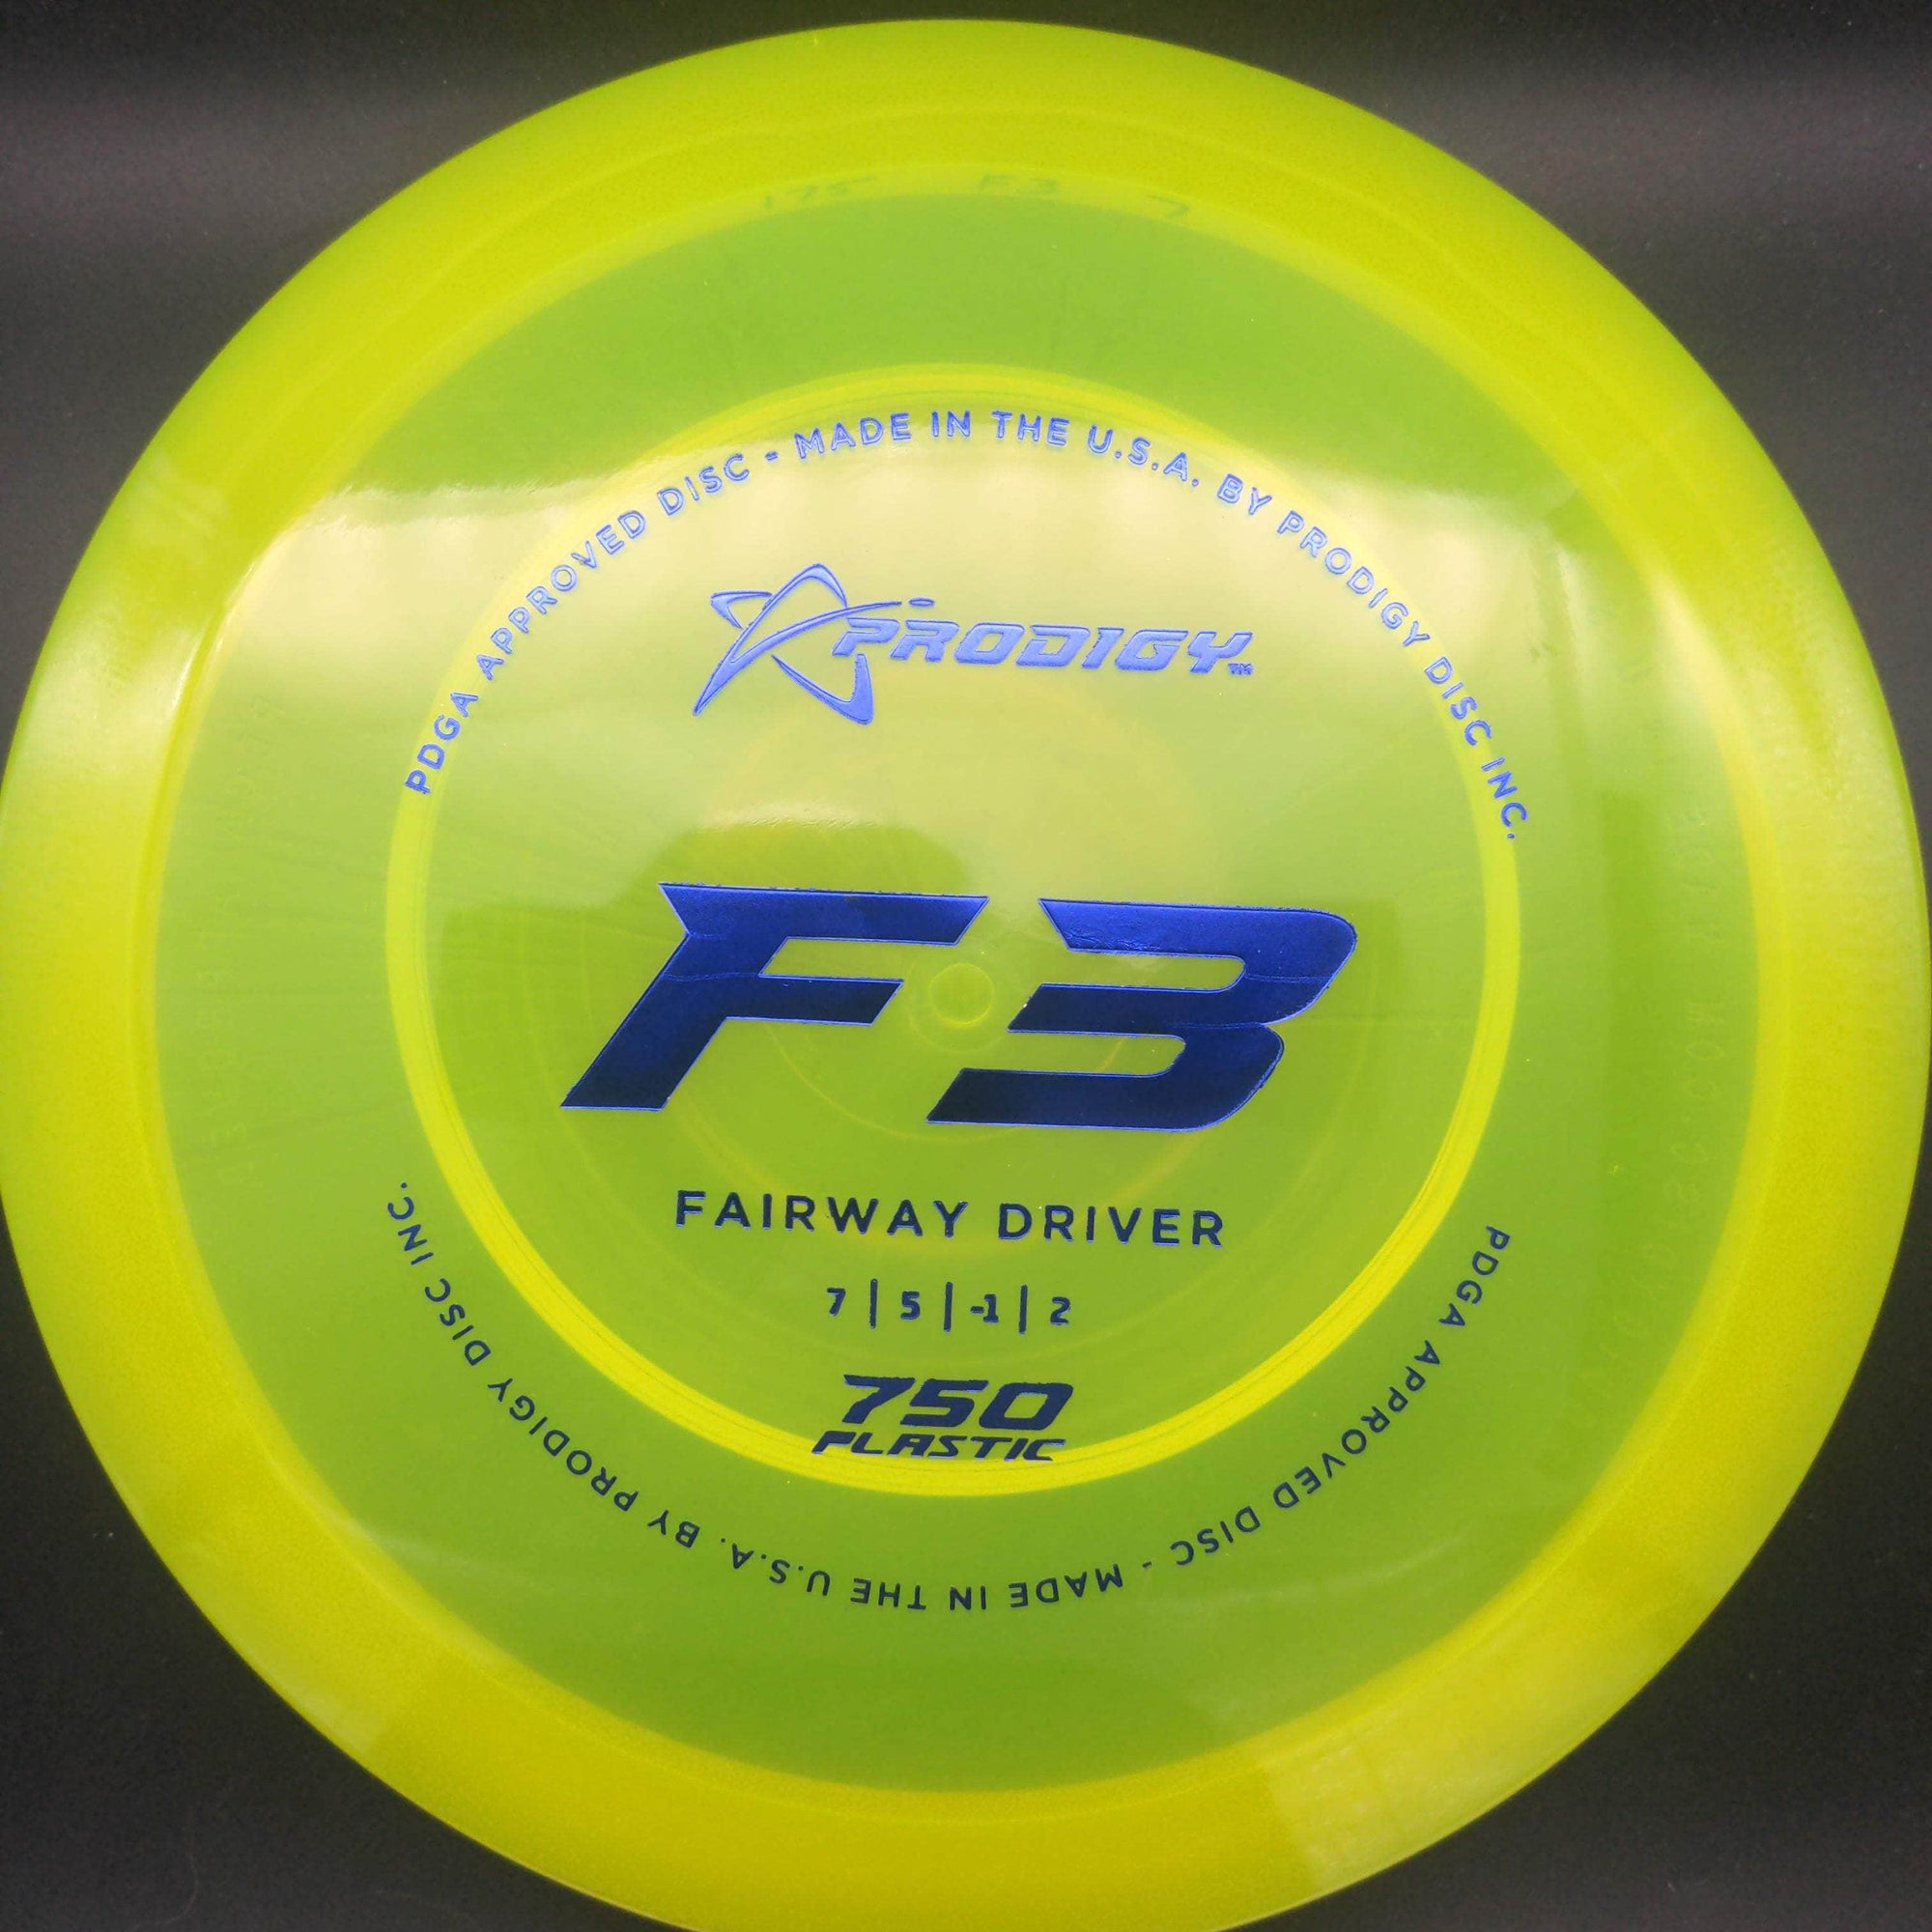 Prodigy Fairway Driver F3, 750 Plastic